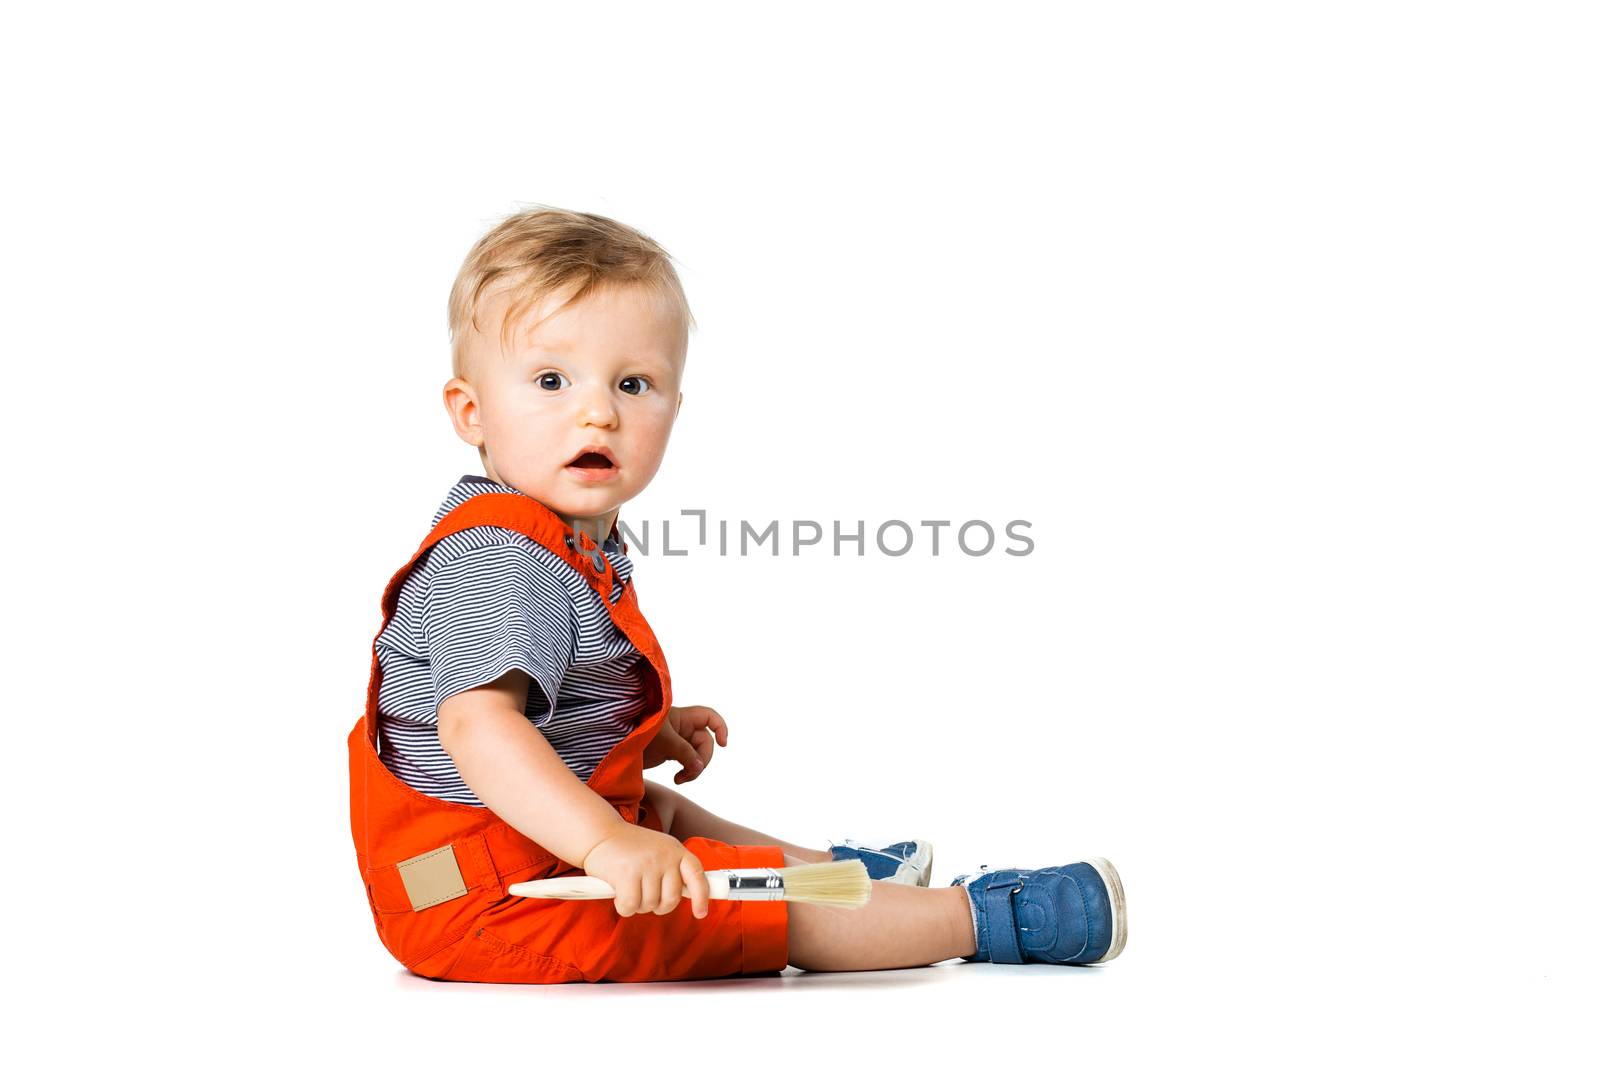 baby boy sitting on the floor, holding paint brush, isolated on white